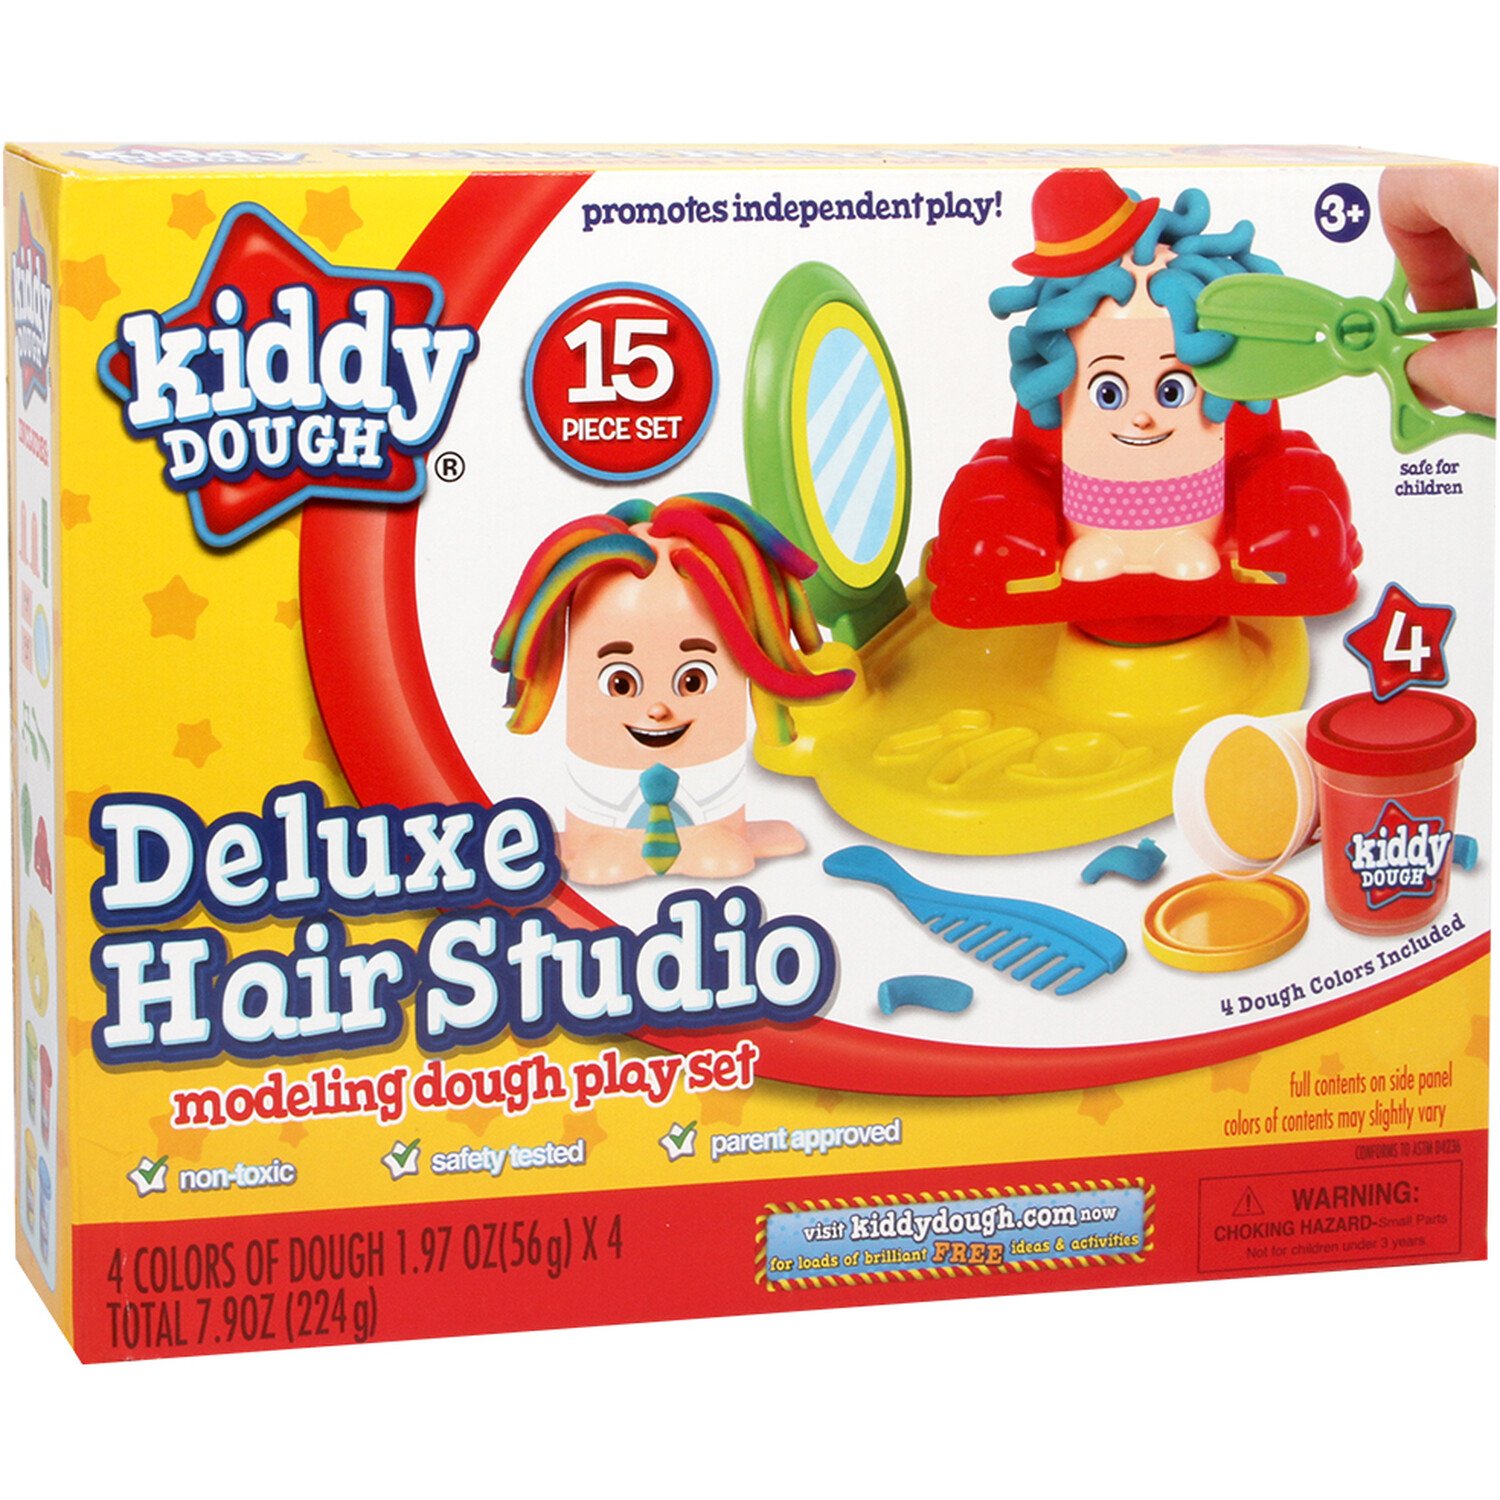 Kiddy Dough Deluxe Hair Studio Modelling Dough Set Image